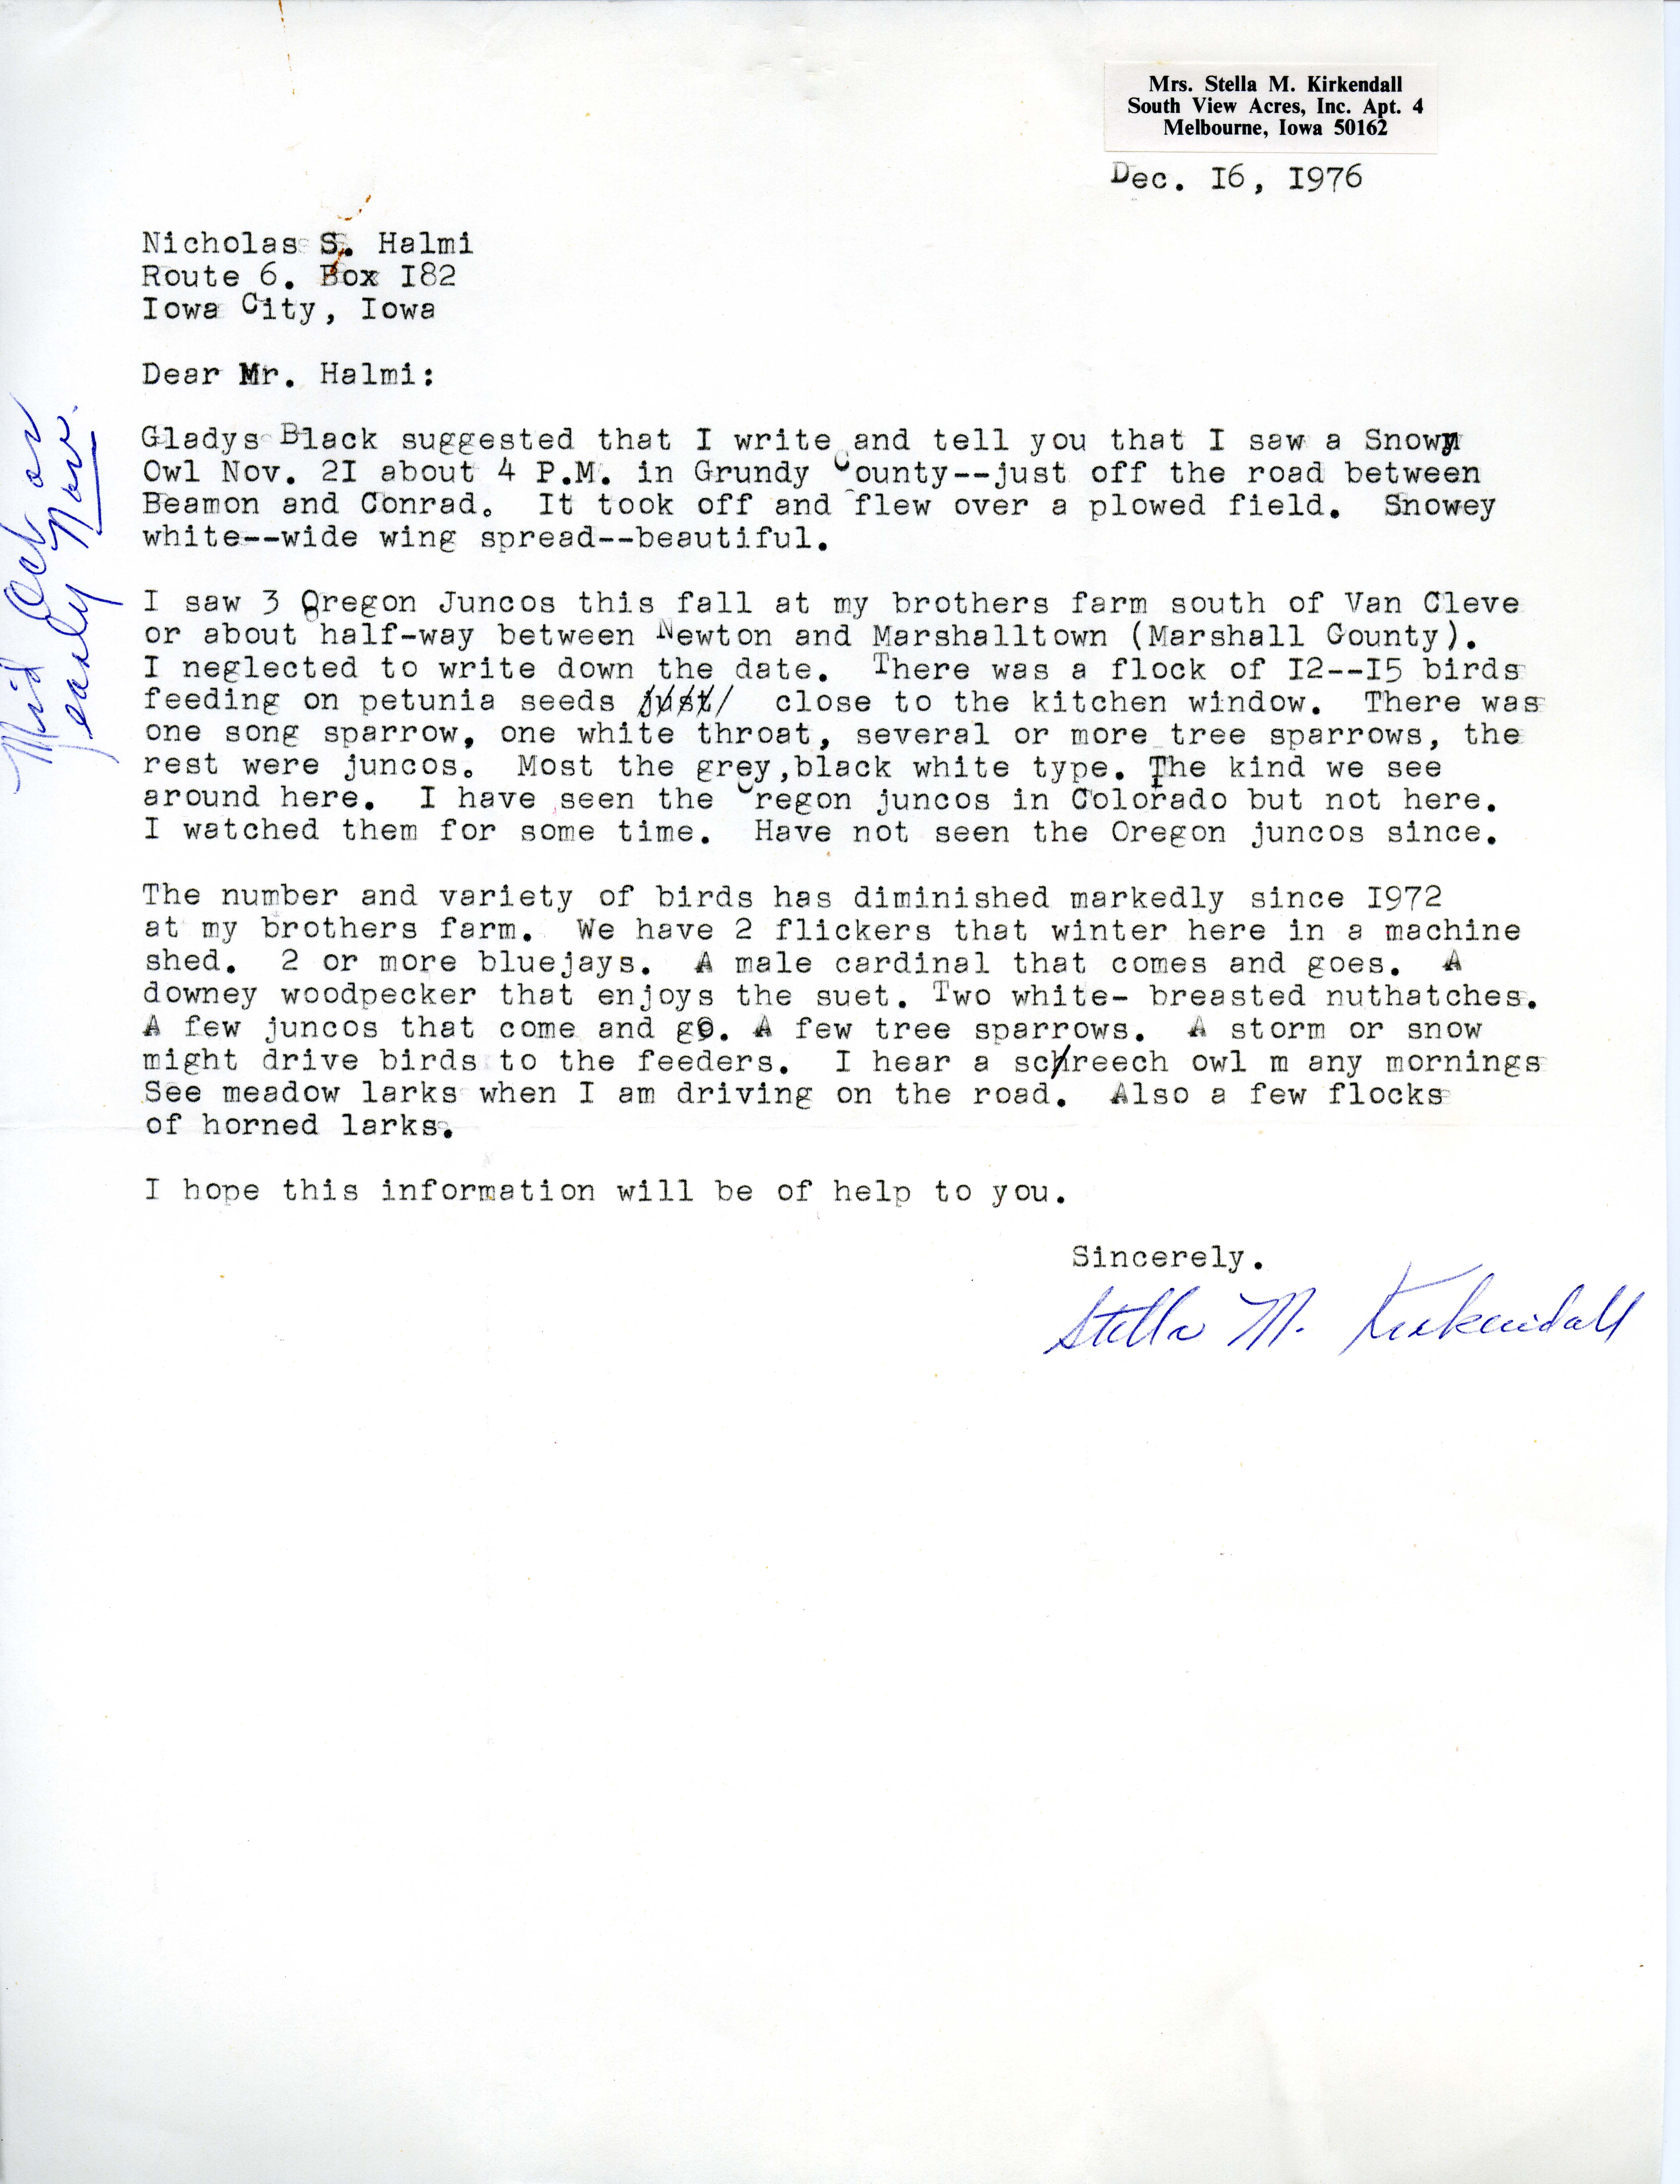 Stella M. Kirkendall letter to Nicholas S. Halmi regarding fall migration, 1976